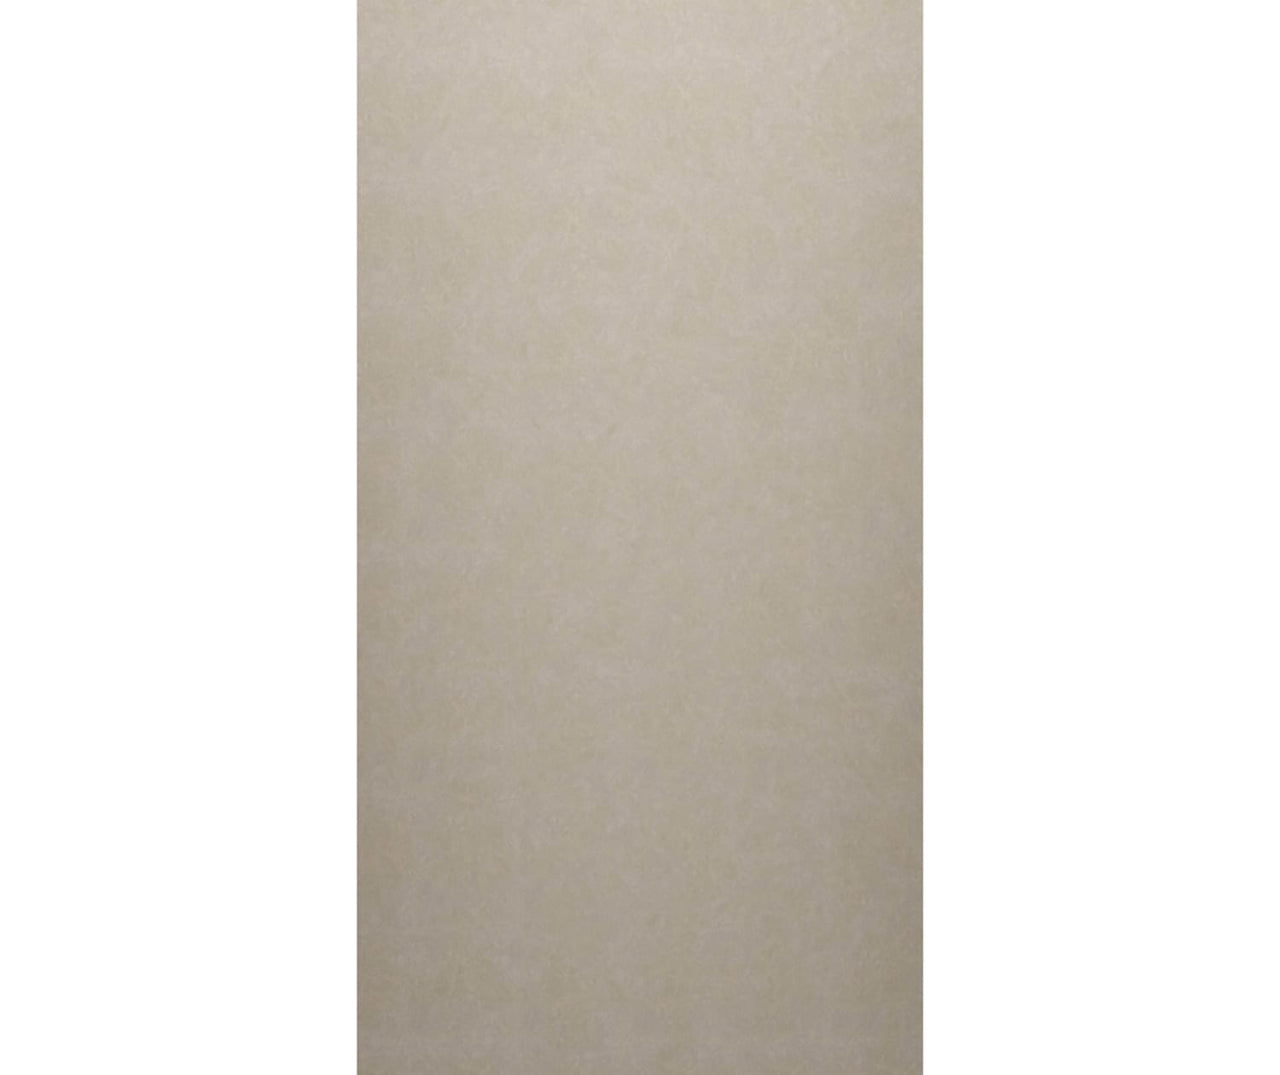 SMMK-8462-1 62 x 84 Swanstone Smooth Tile Glue up Bathtub and Shower Single Wall Panel  - BNGBath